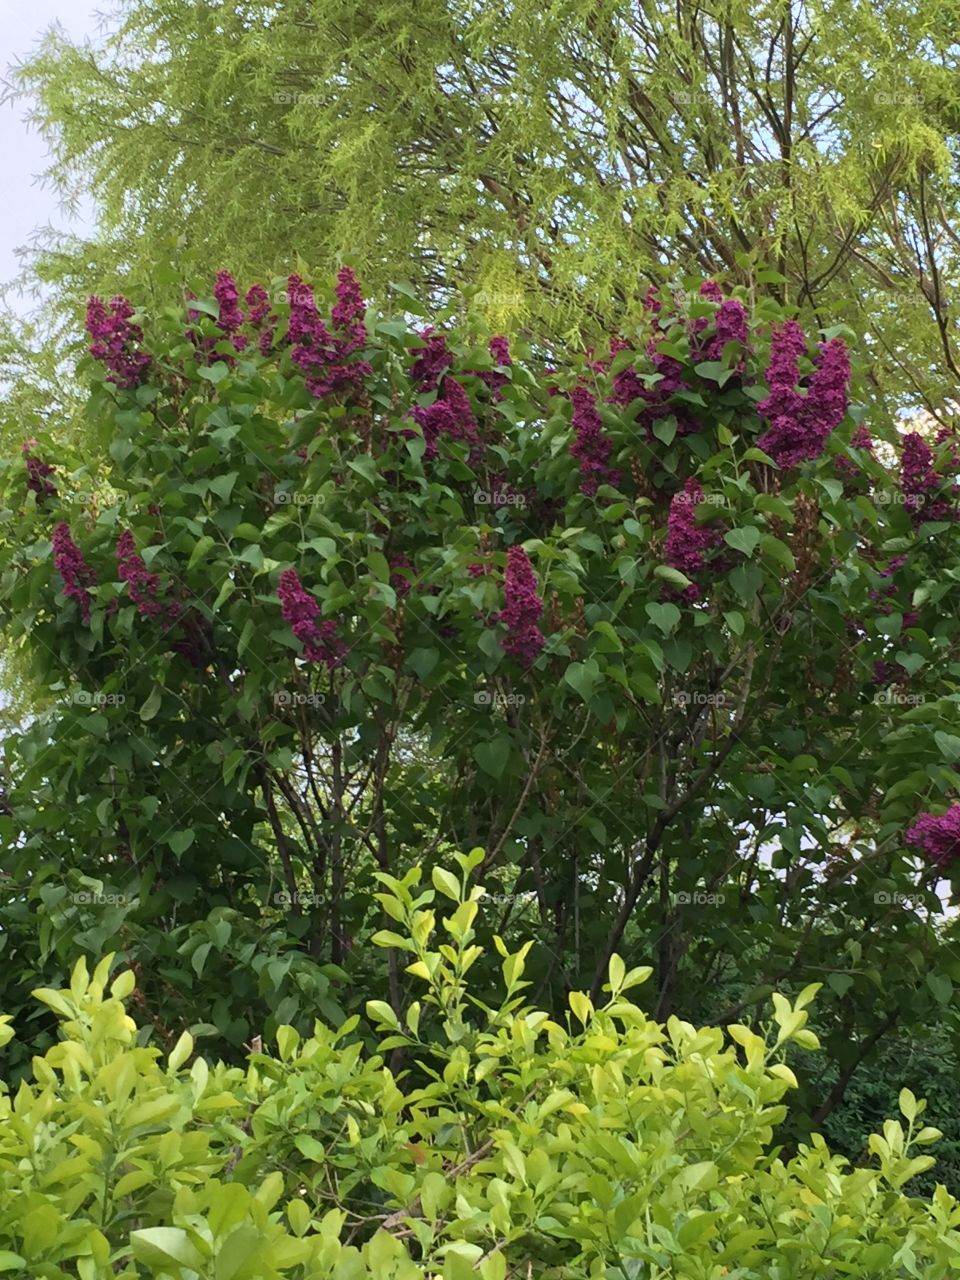 Purple Reign Lilacs in My yard